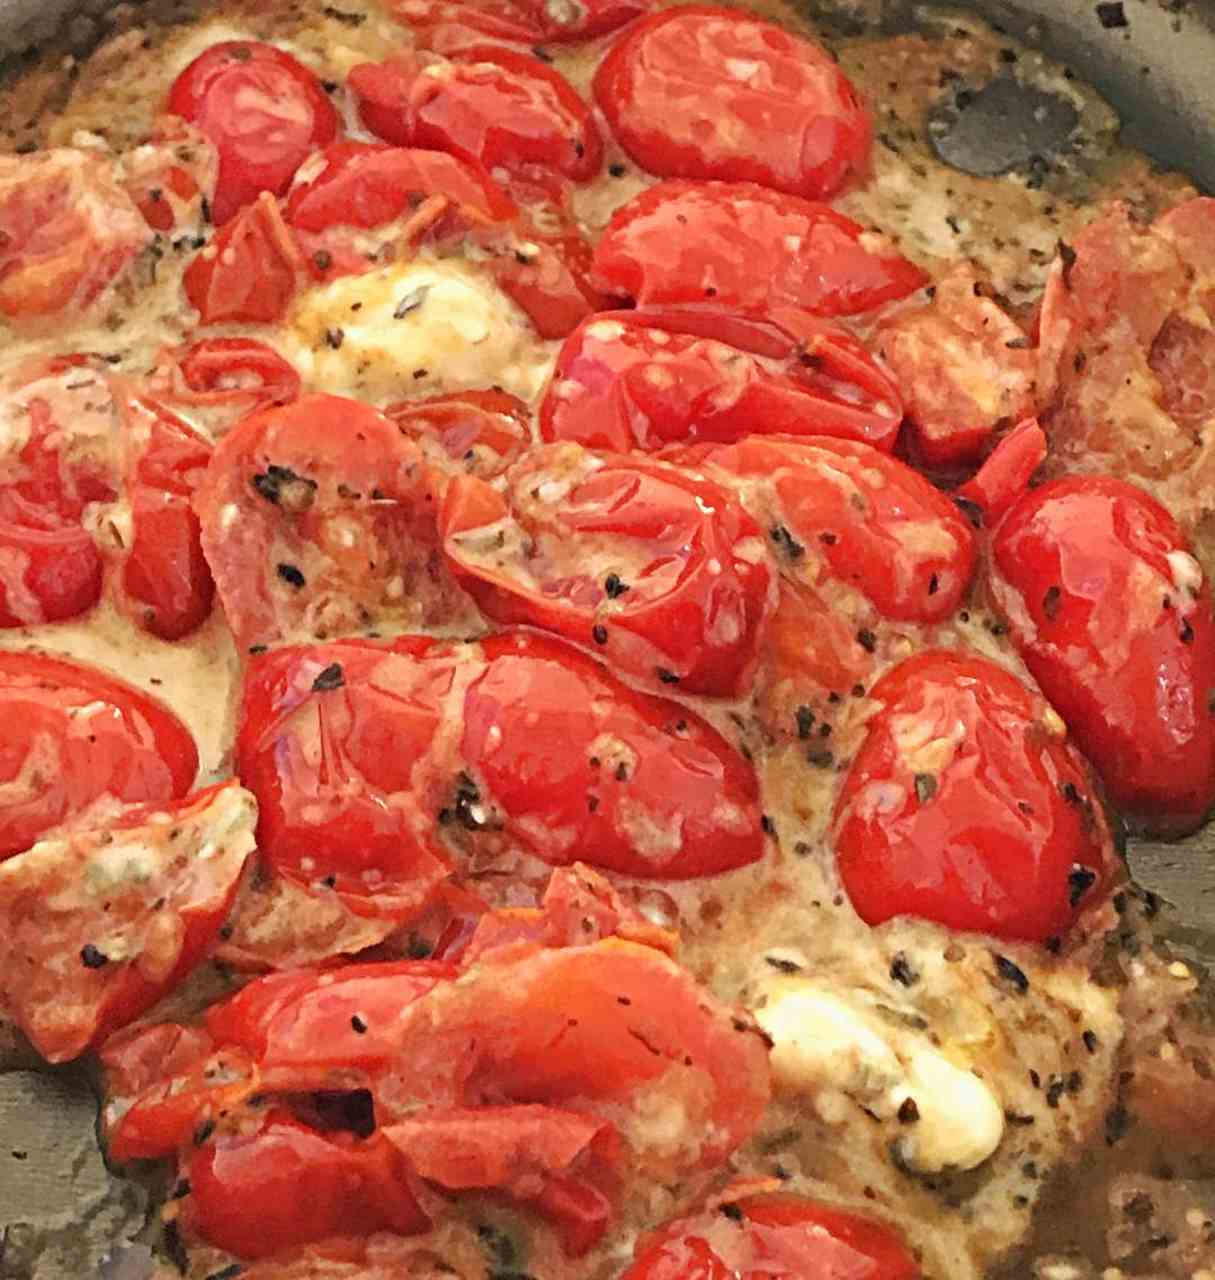 Confit de tomate cereja com queijo gorgonzola